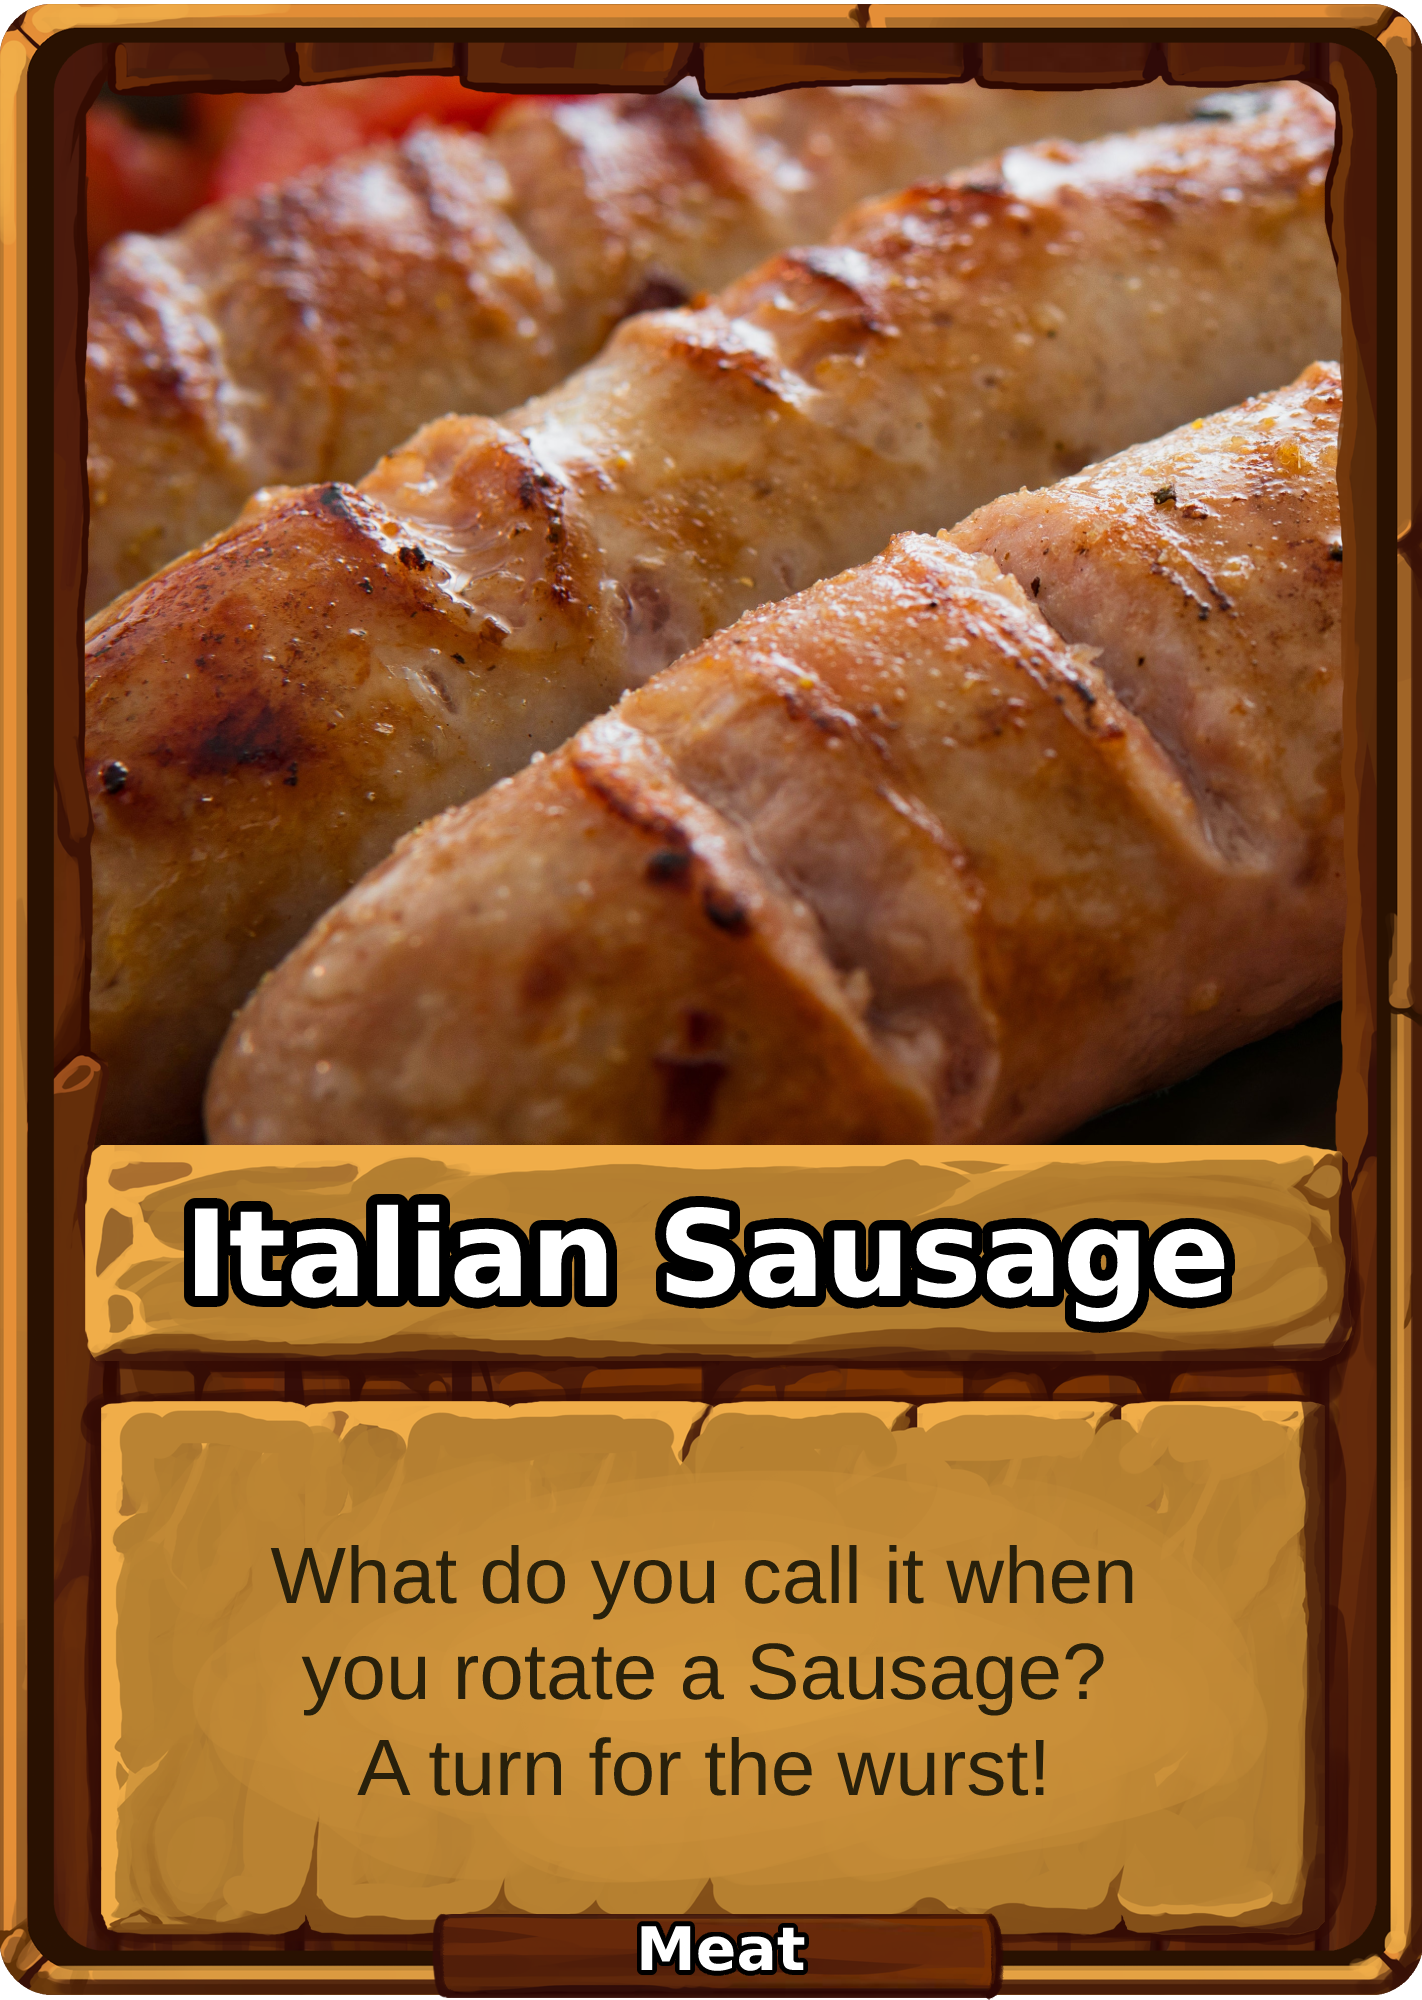 Italian Sausage Card Image